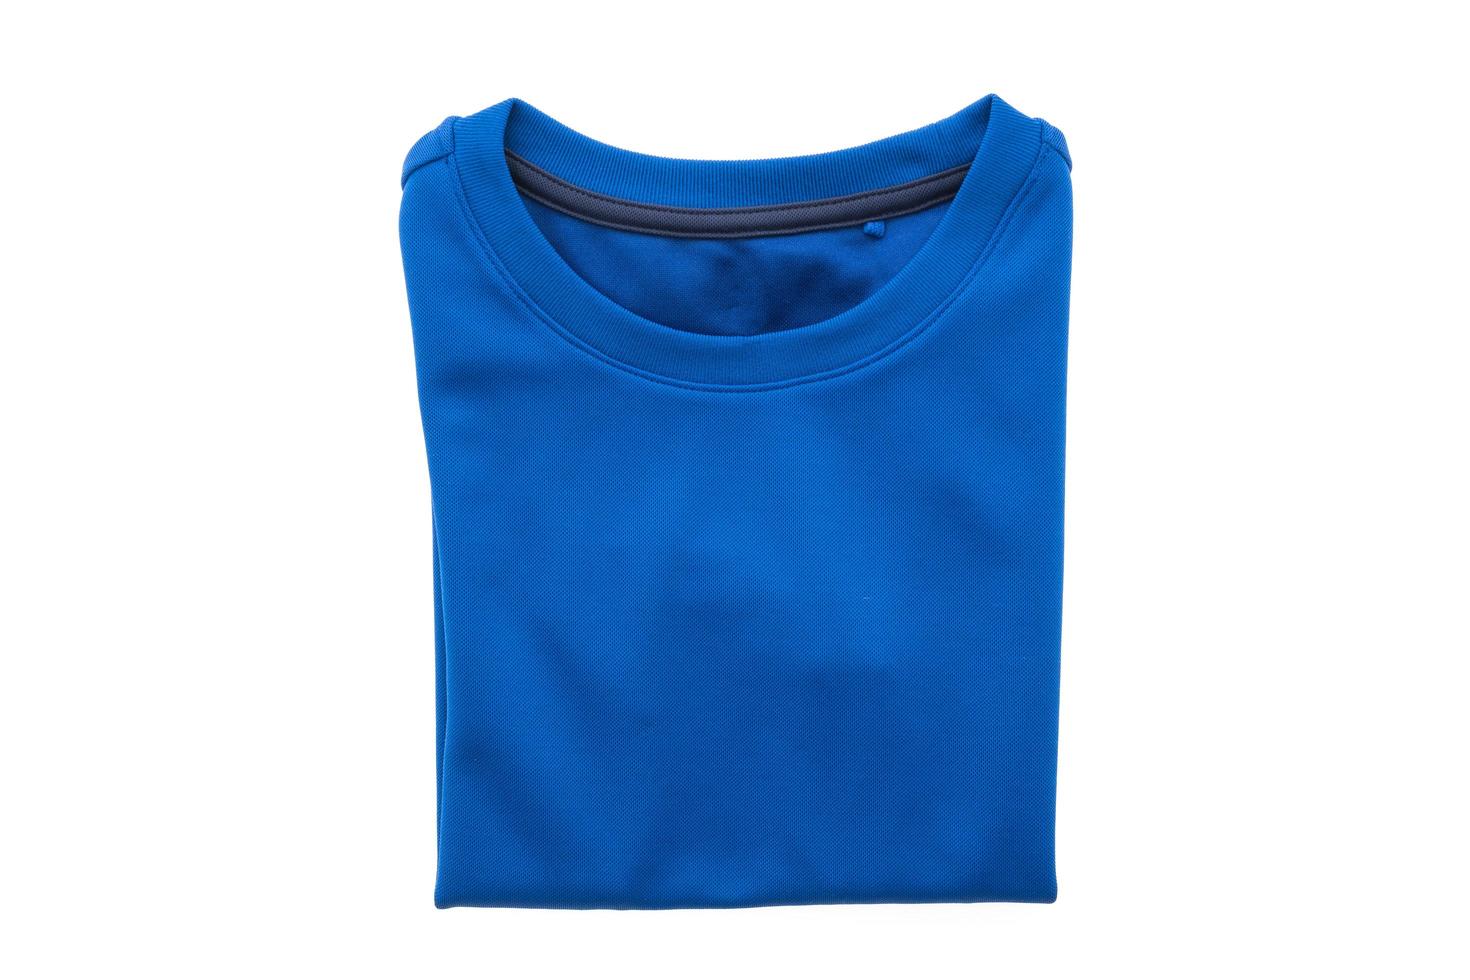 camiseta azul para roupas foto